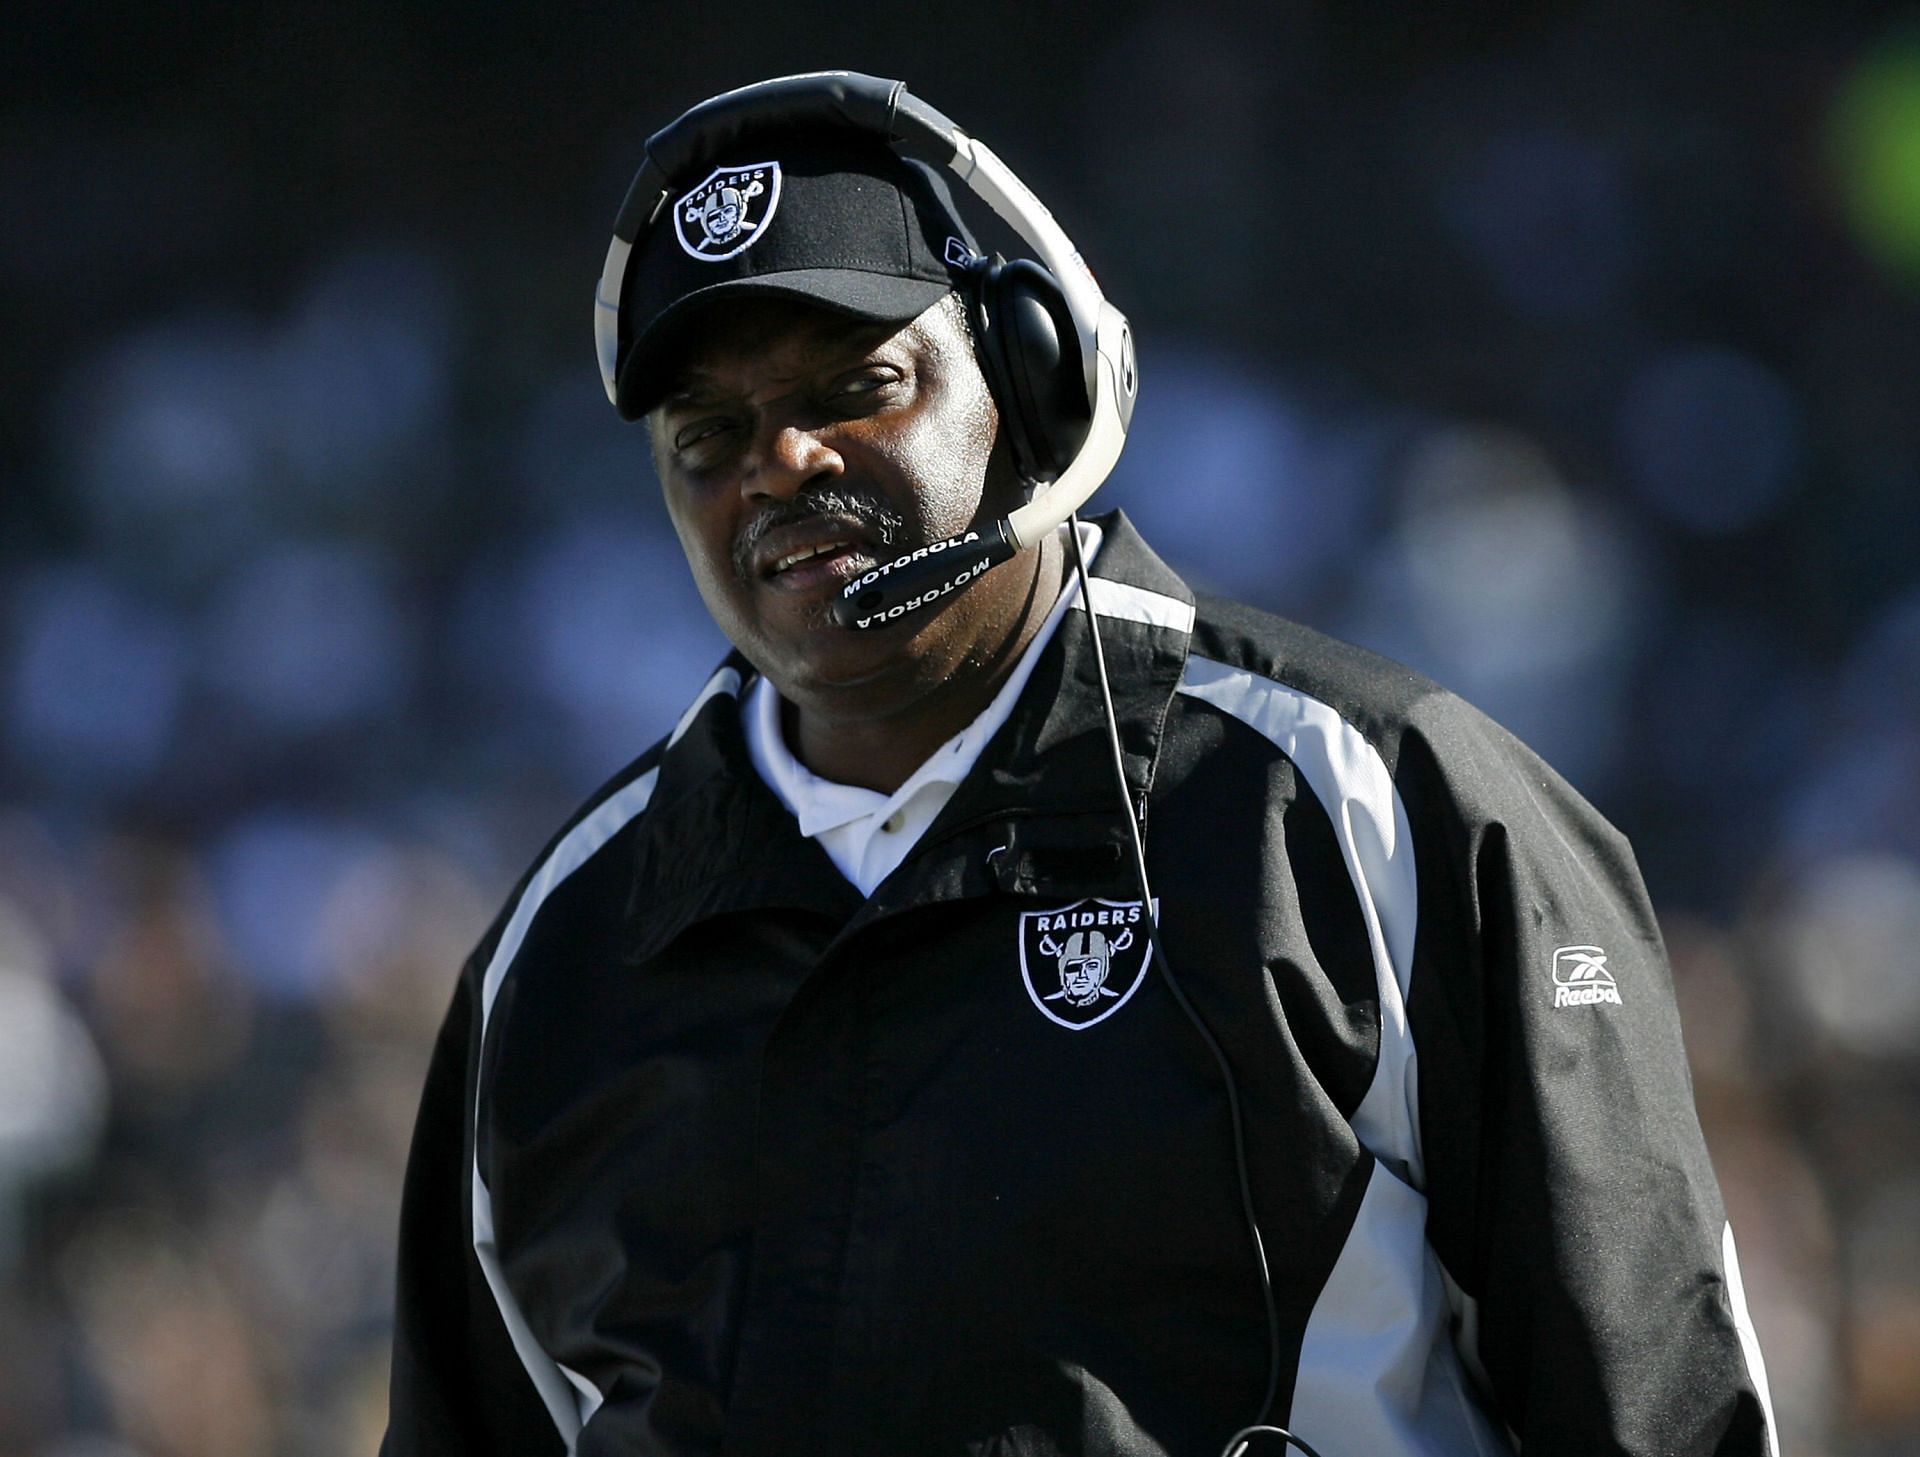 Oakland Raiders coach Art Shell